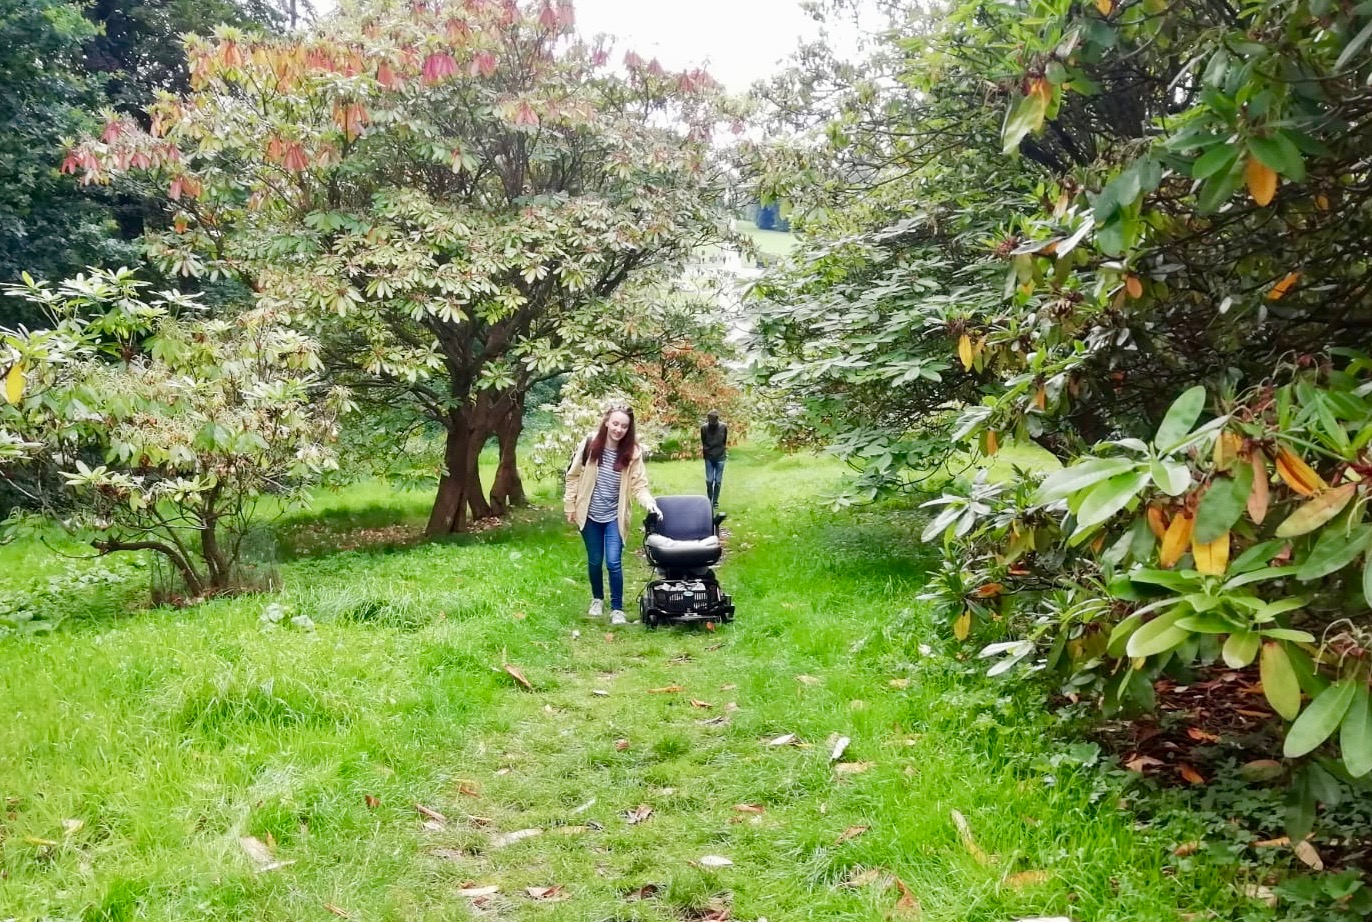 pippa walking alongside and driving powerchair up grassy hill, facing camera